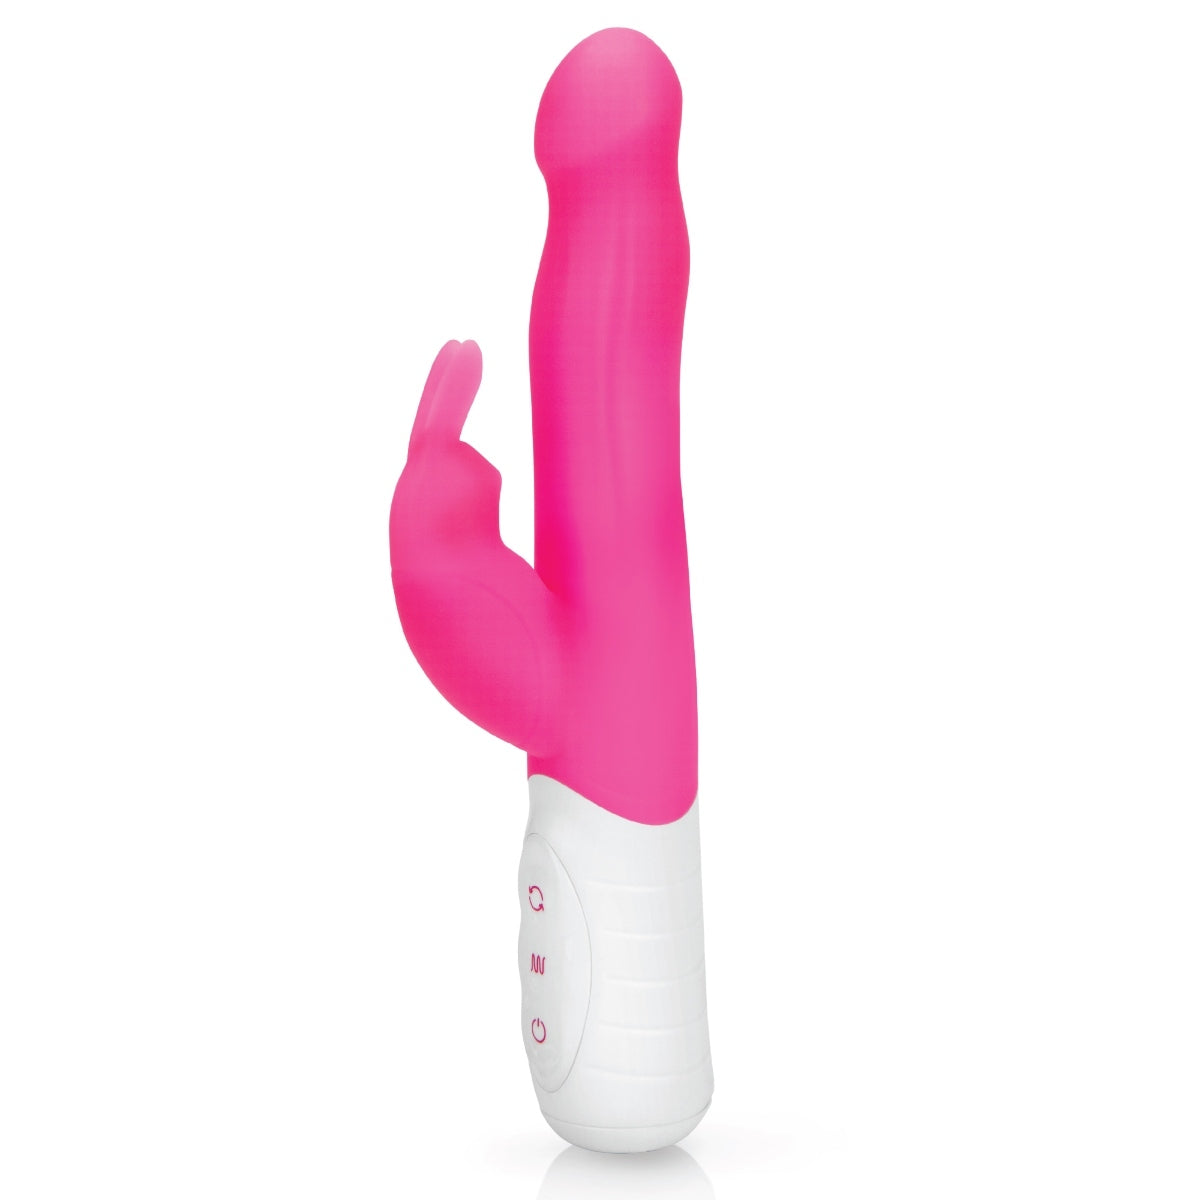 Rabbit Essentials Slim Shaft Rabbit Vibrator With Rotating Beads Hot Pink